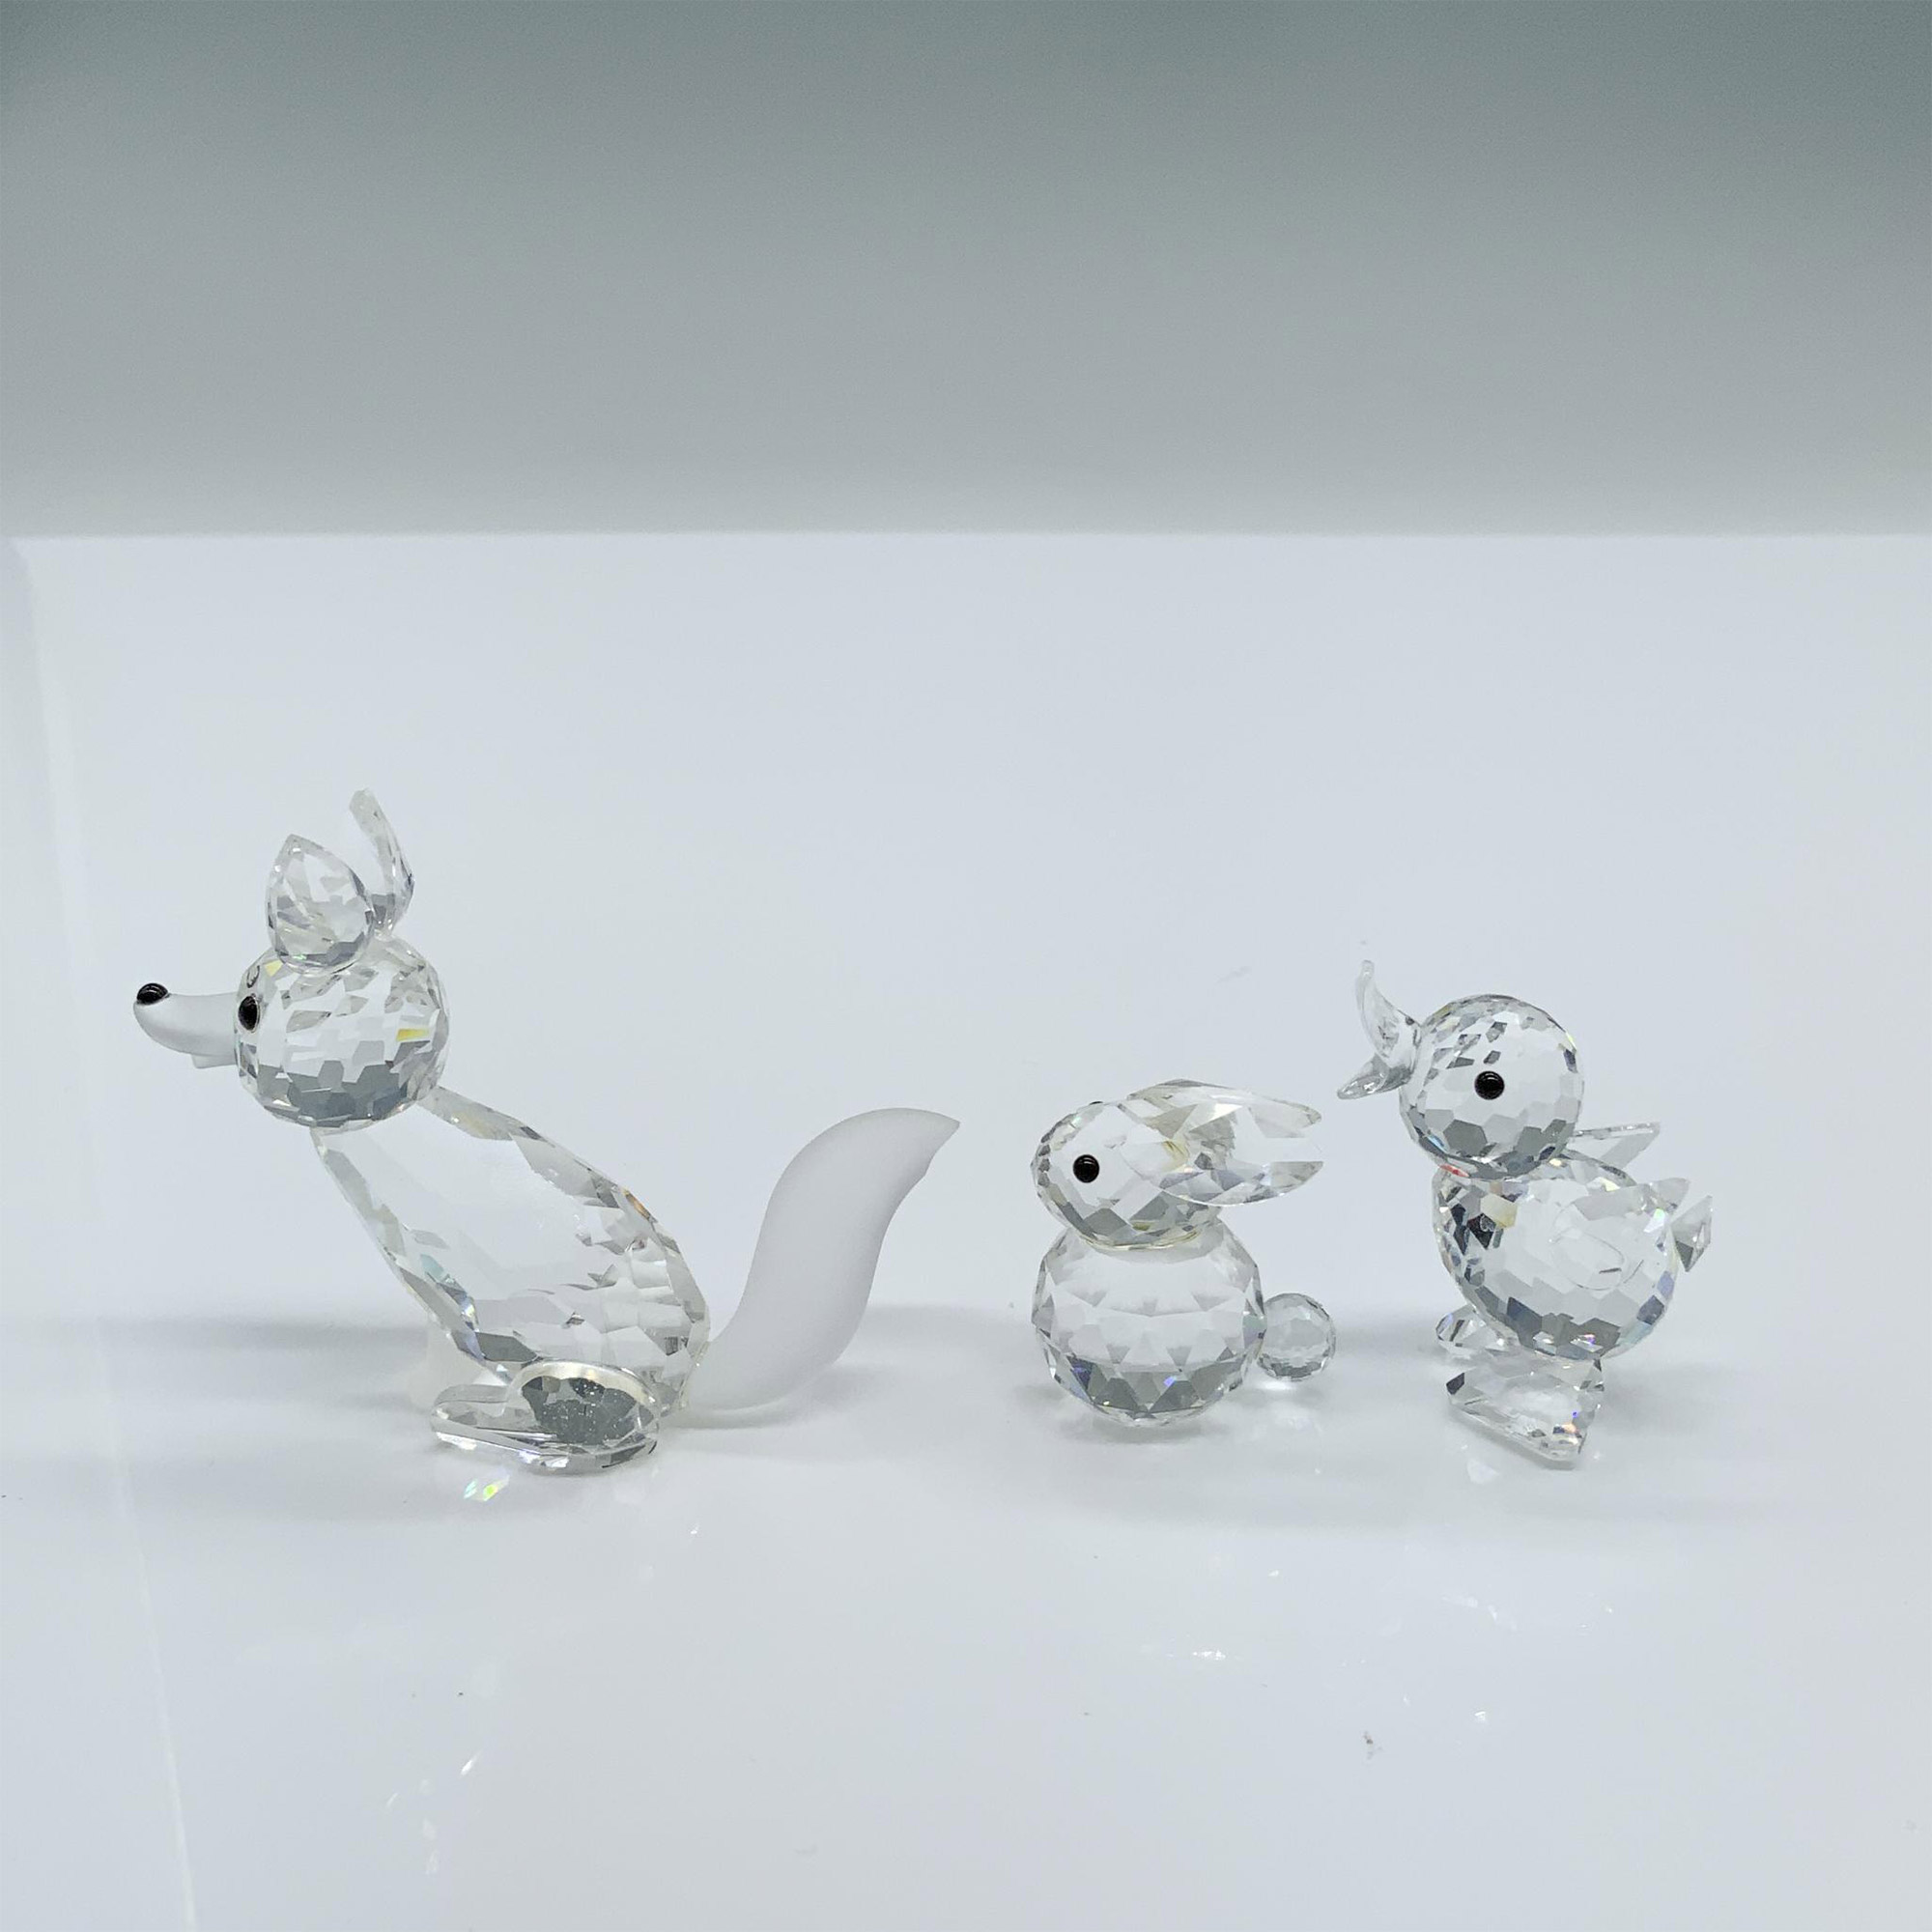 3pc Grouping of Swarovski Crystal Animal Figurines - Image 2 of 4